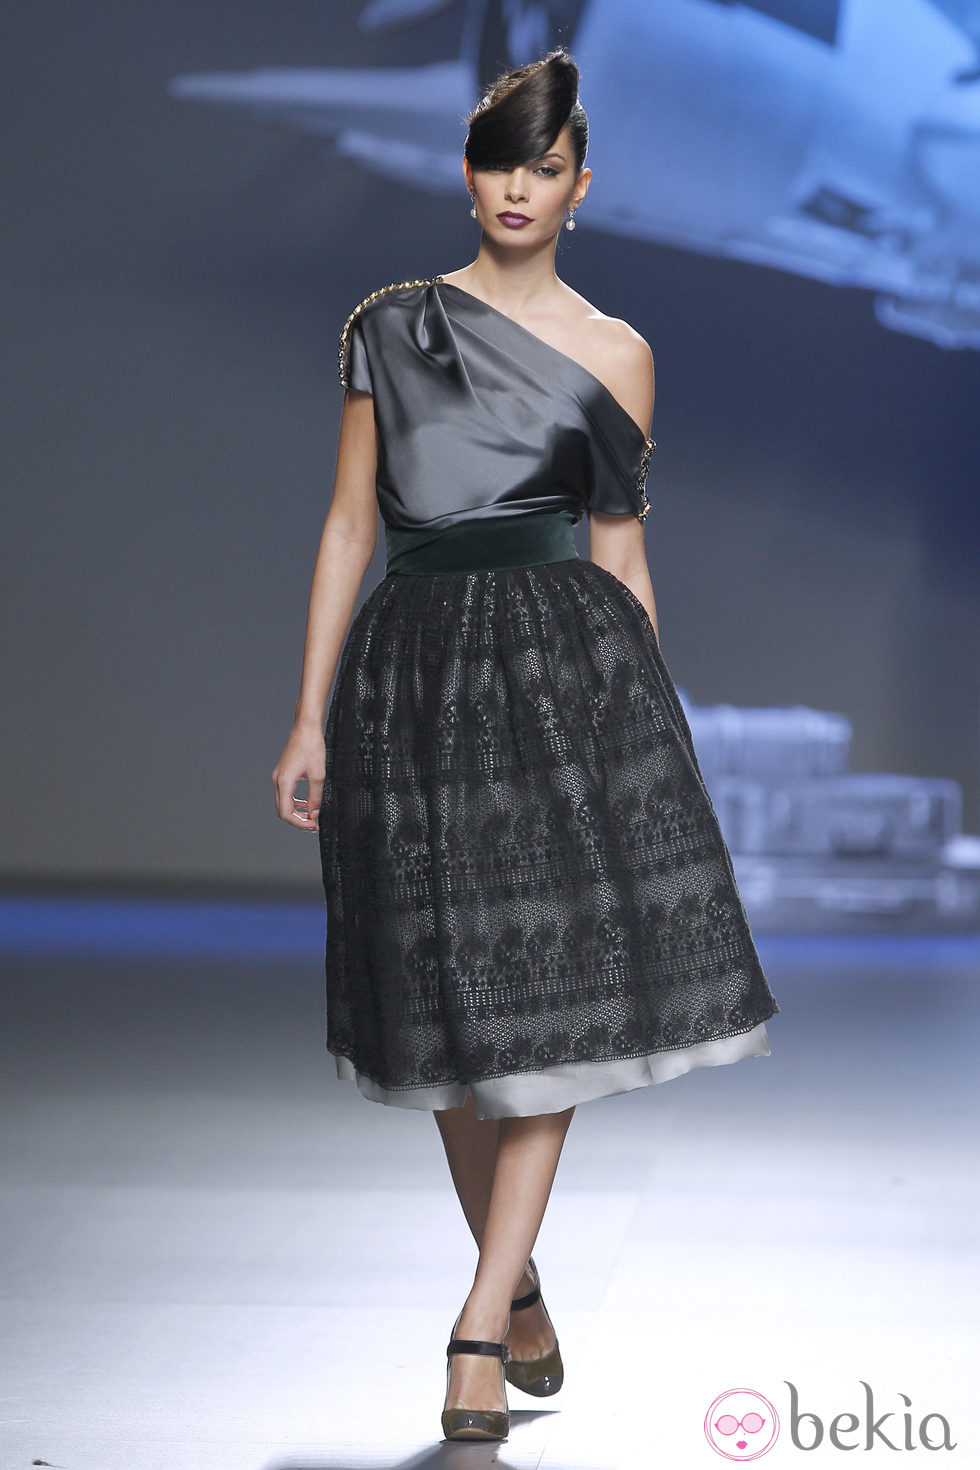 Vestido asimétrico en negro de Ion Fiz en Fashion Week Madrid